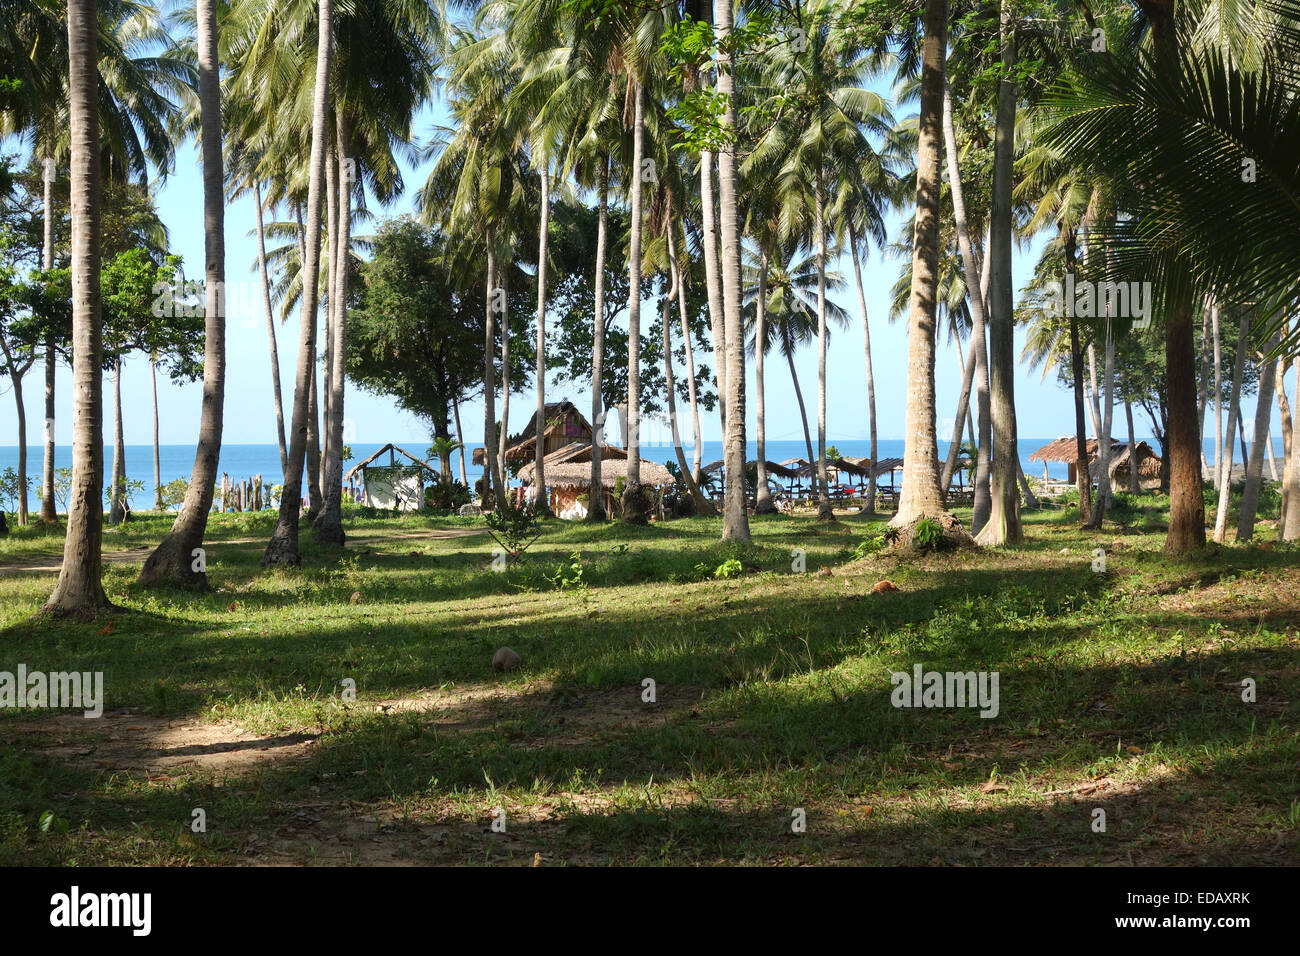 Coconut palm trees, Cocos nucifera, at the beach in Koh Lanta, Krabi Province, Thailand, Southeast Asia. Stock Photo